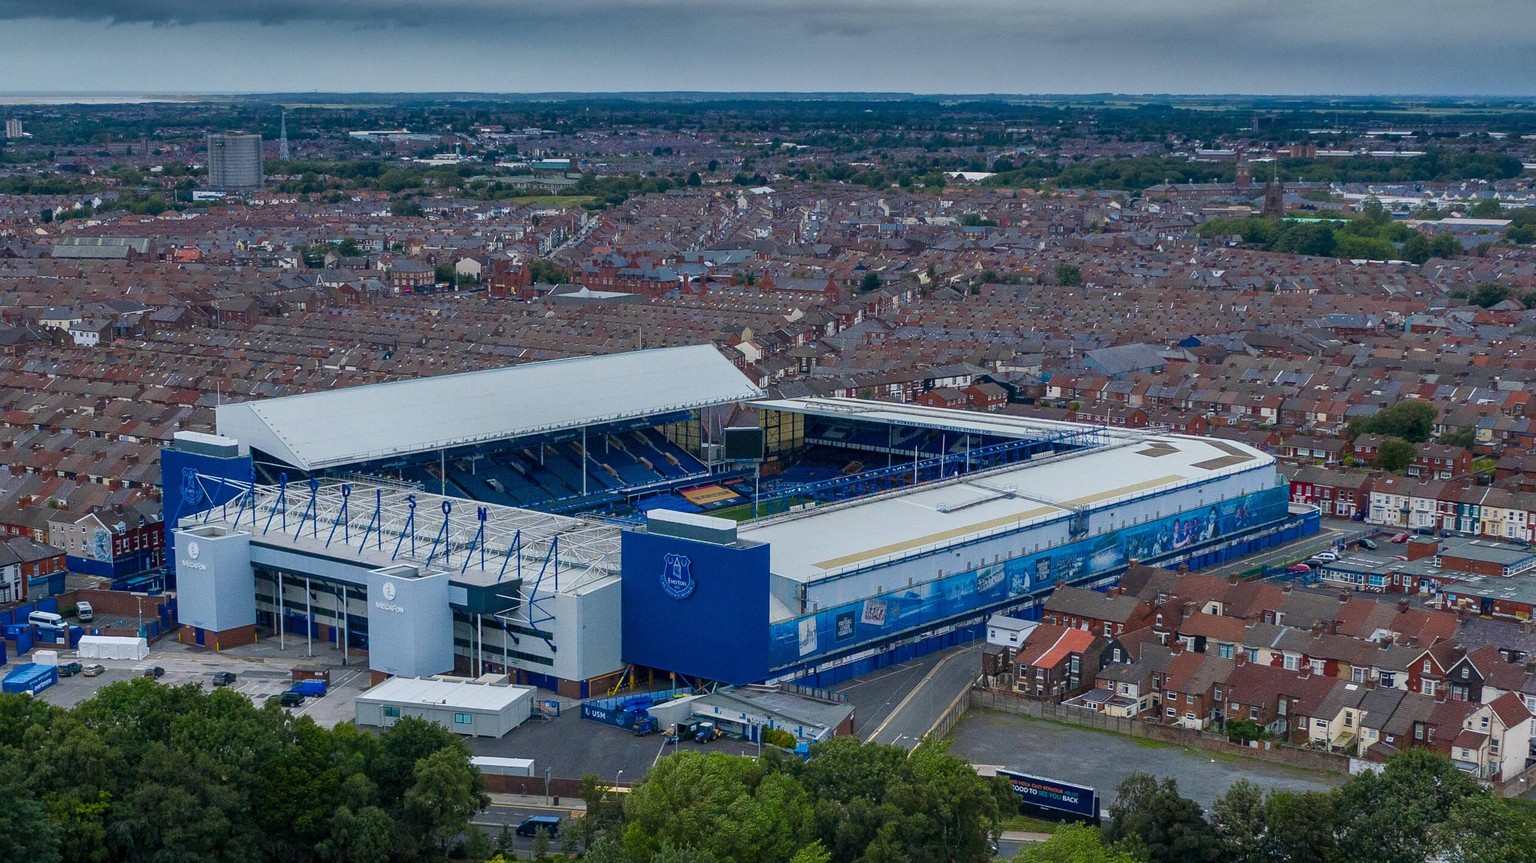 Aerial photograph of Goodison Park Stadium home of English Premier League team Everton at Goodison Park, Liverpool, England on 3 July 2020. PUBLICATIONxNOTxINxUK Copyright: xDavidxHornx PMI-3524-0001